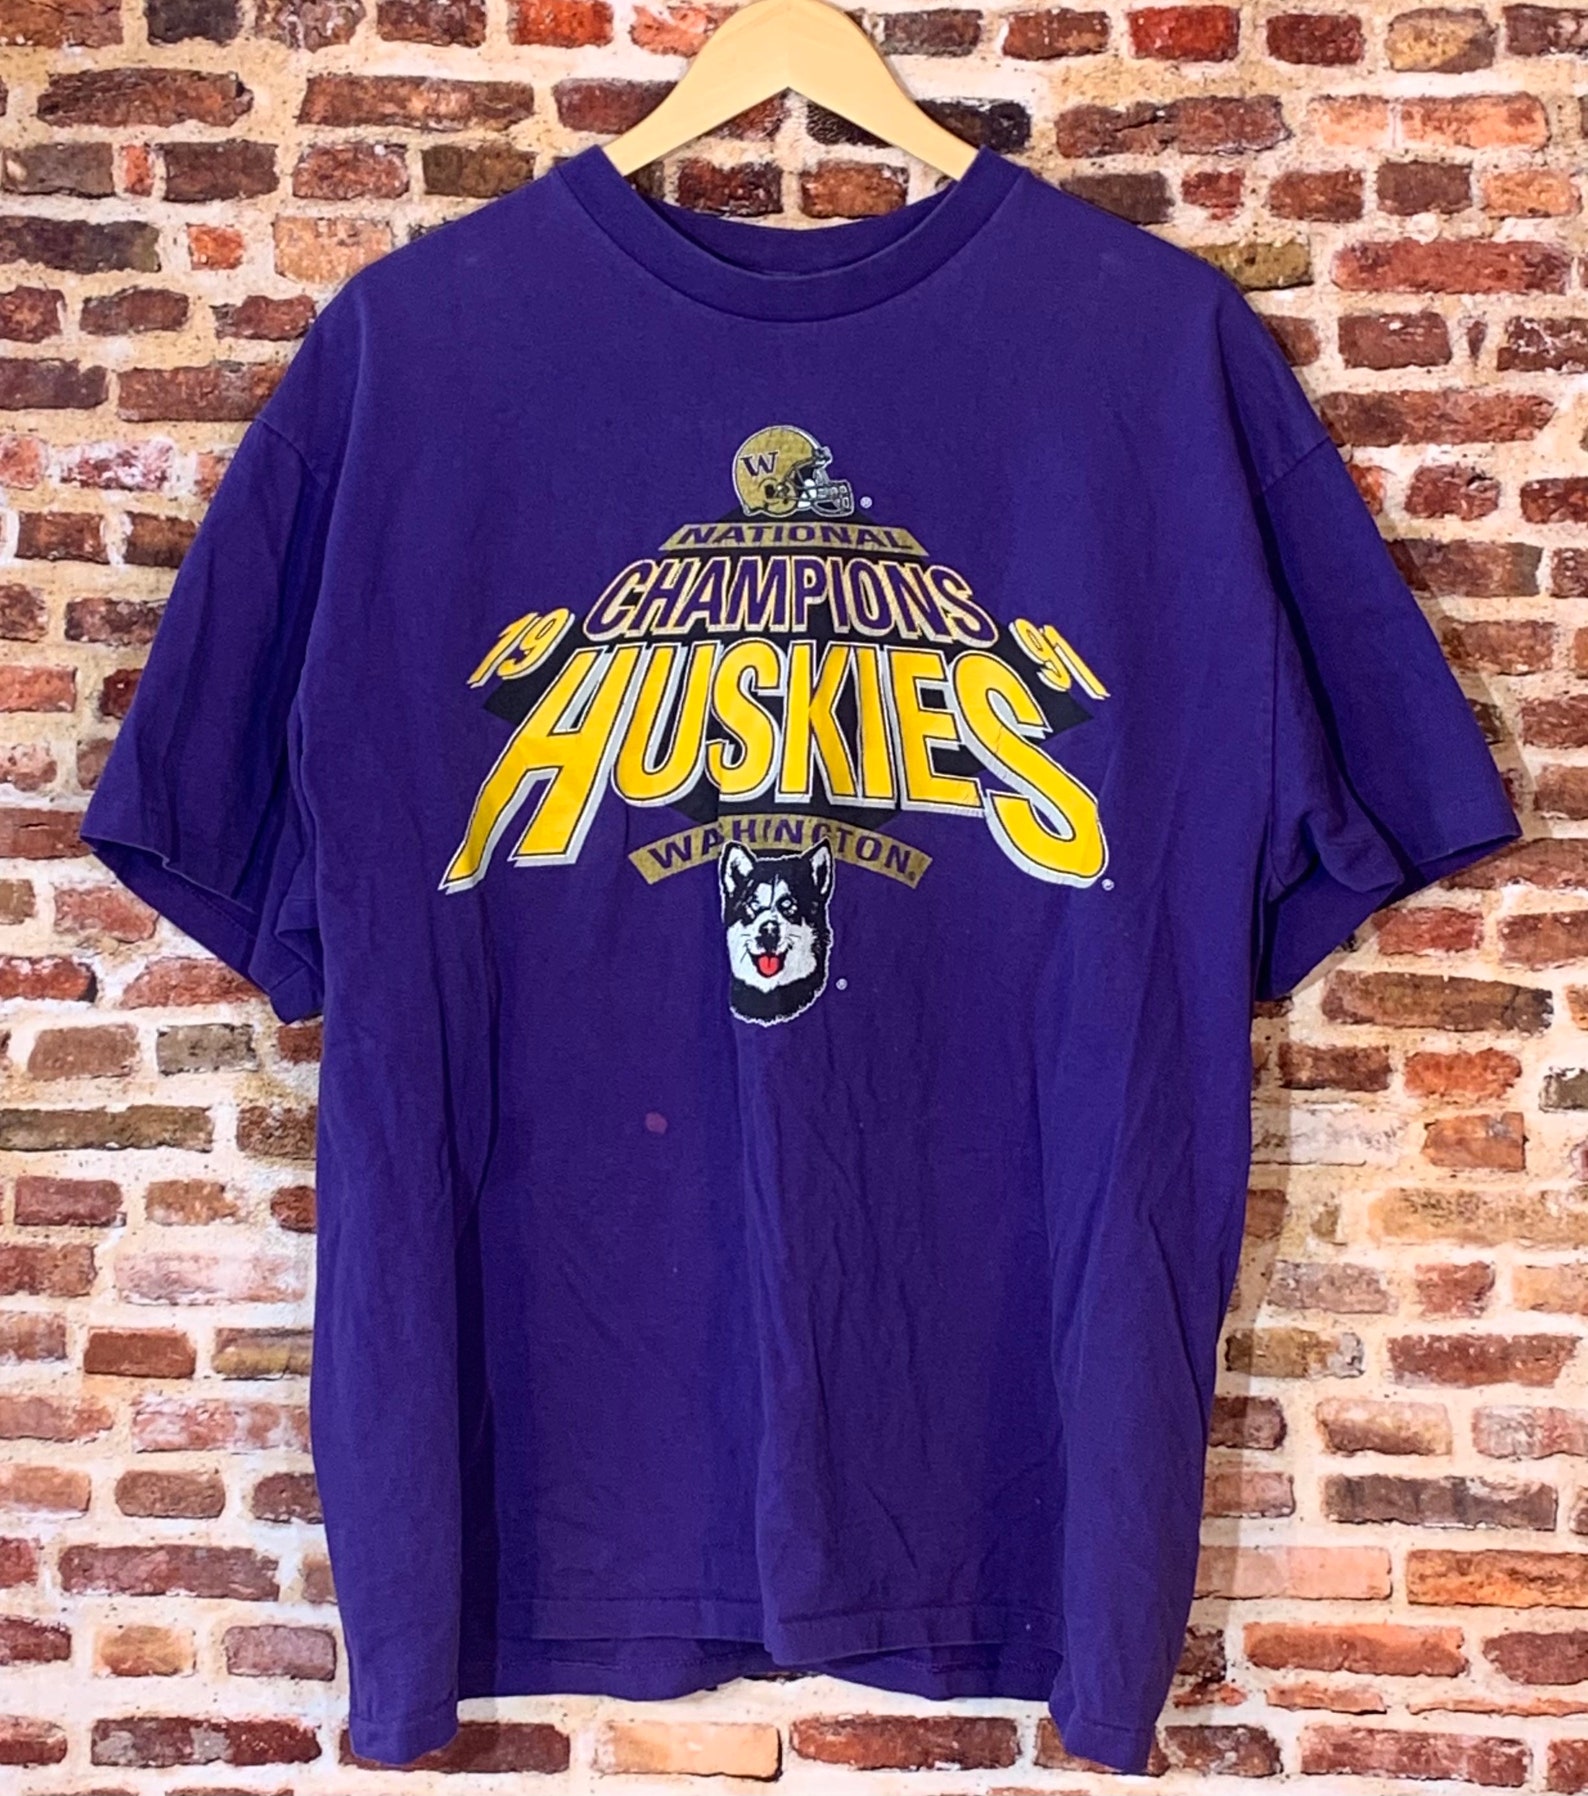 Vintage 1991 Washington Huskies Football National Champions | Etsy